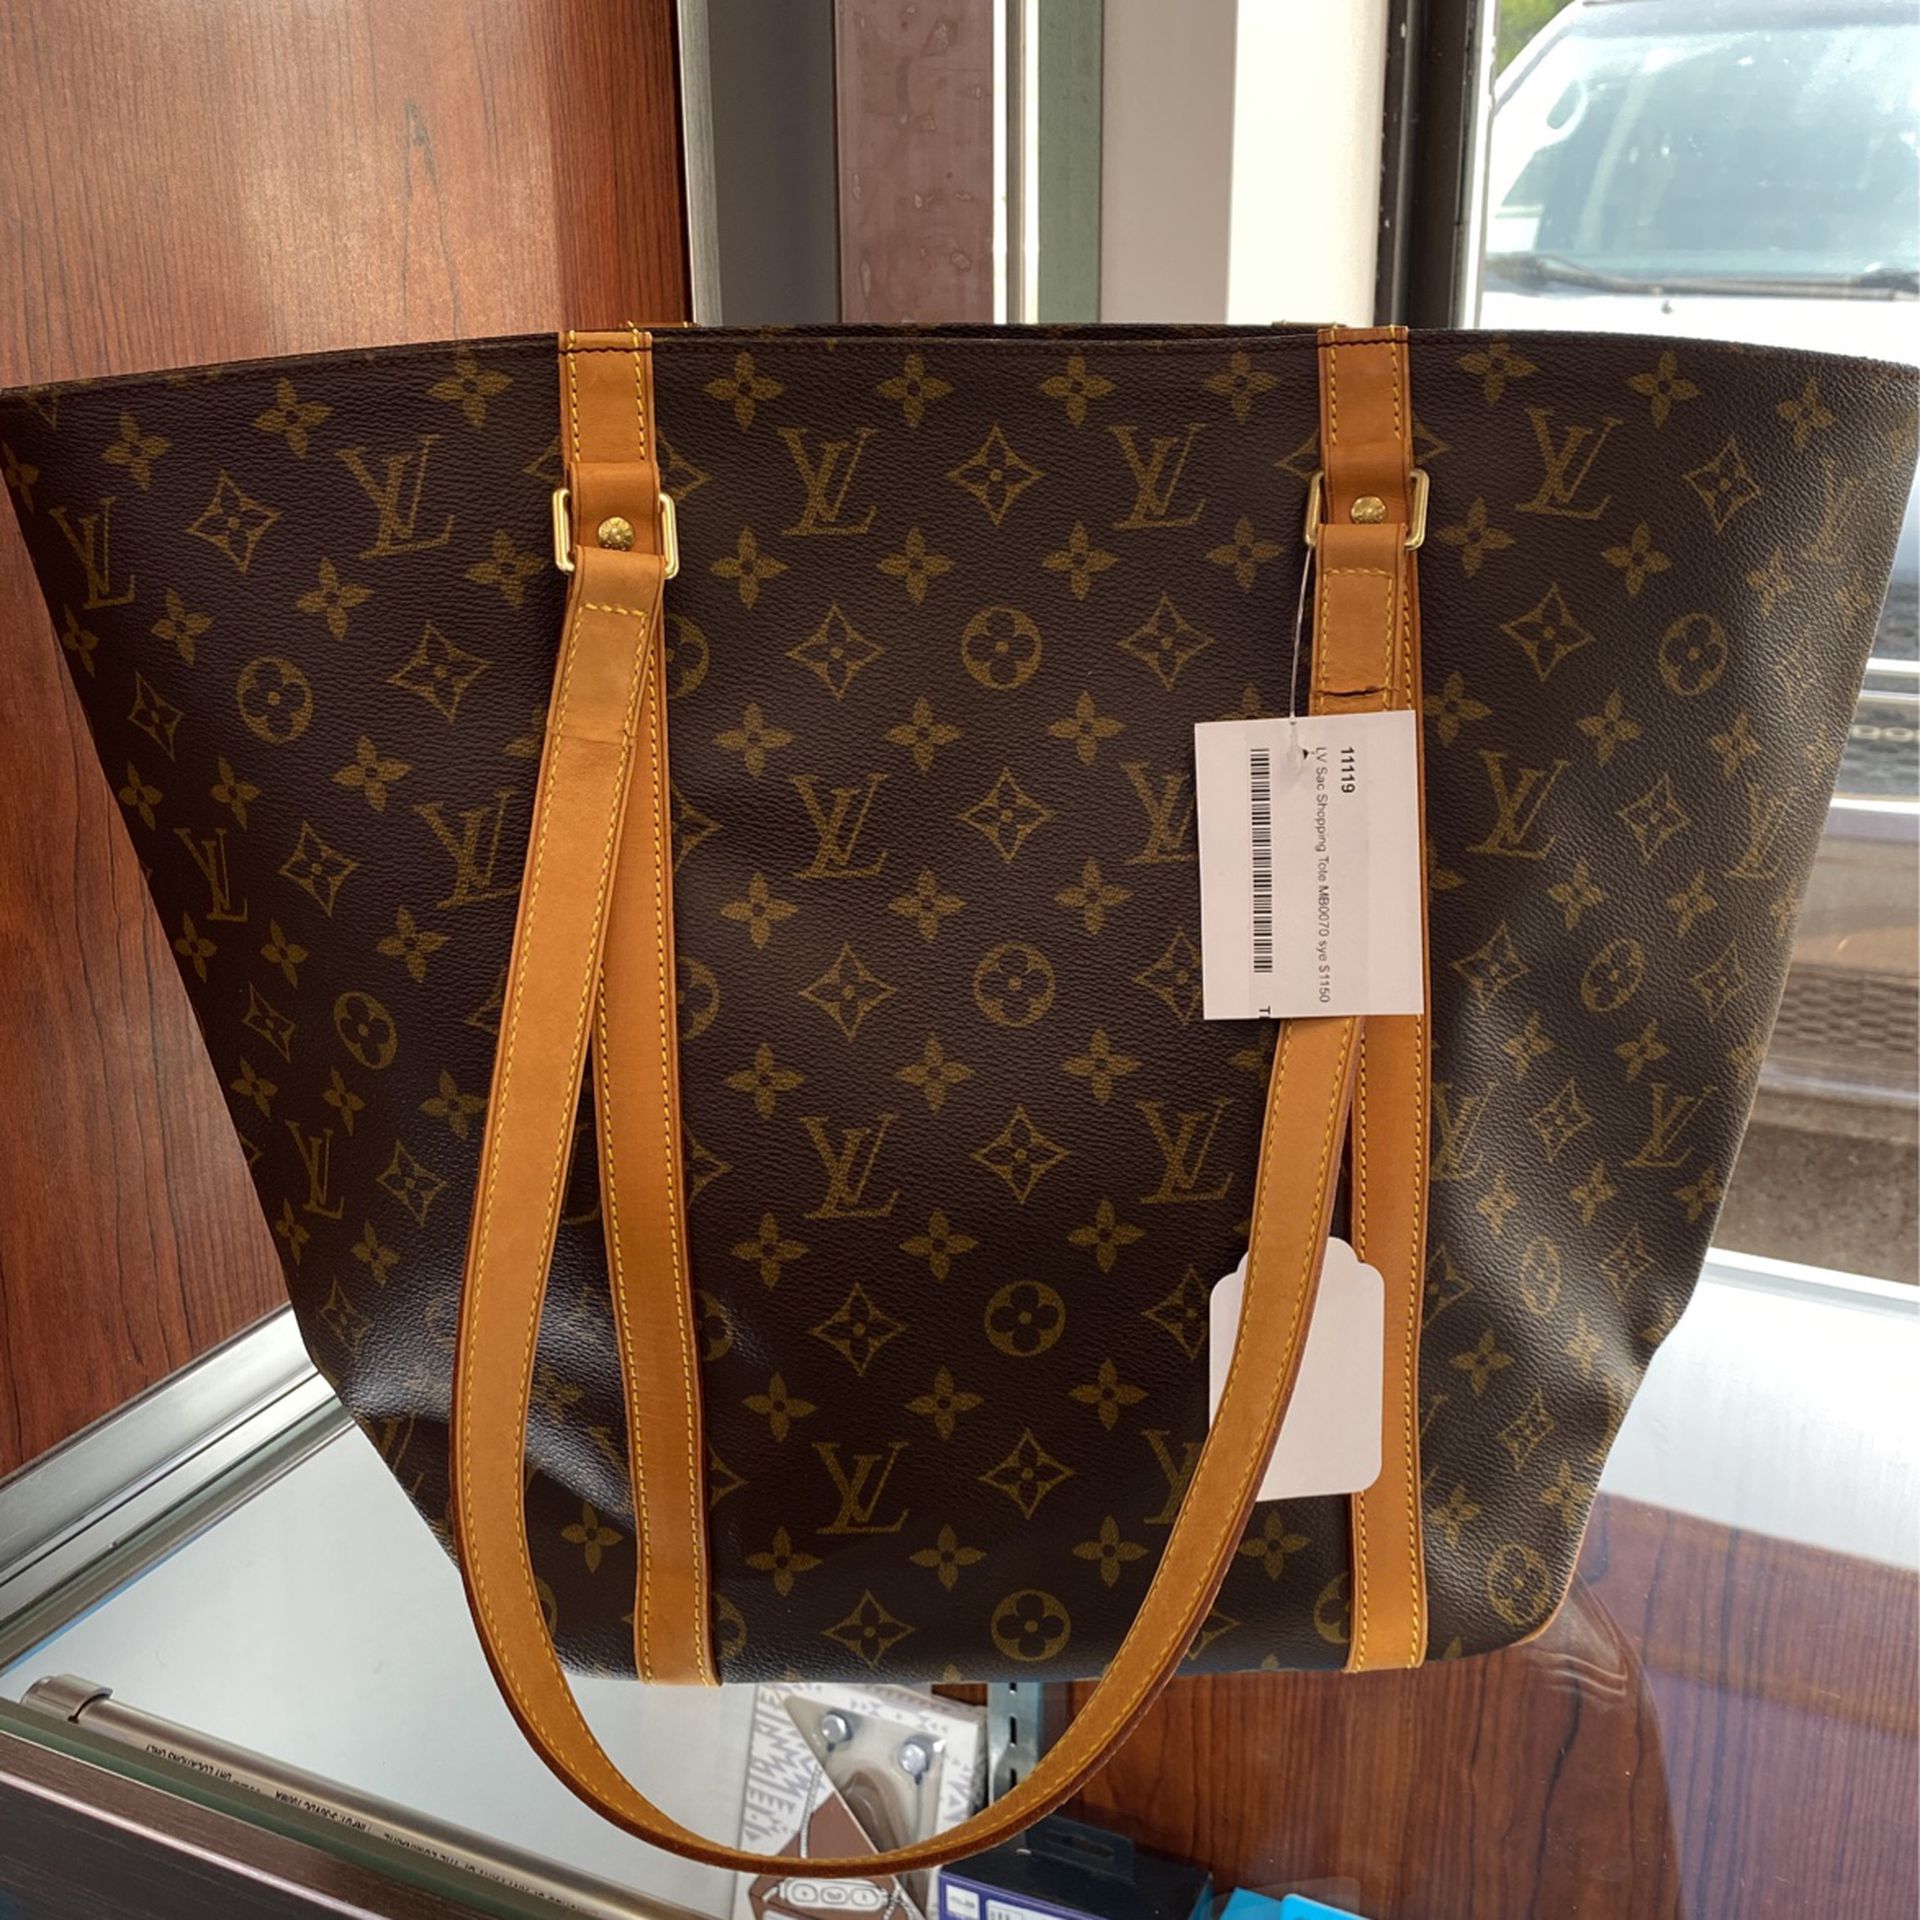 Louis Vuitton Sac Shopping Tote Handbag for Sale in Glen Raven, NC - OfferUp